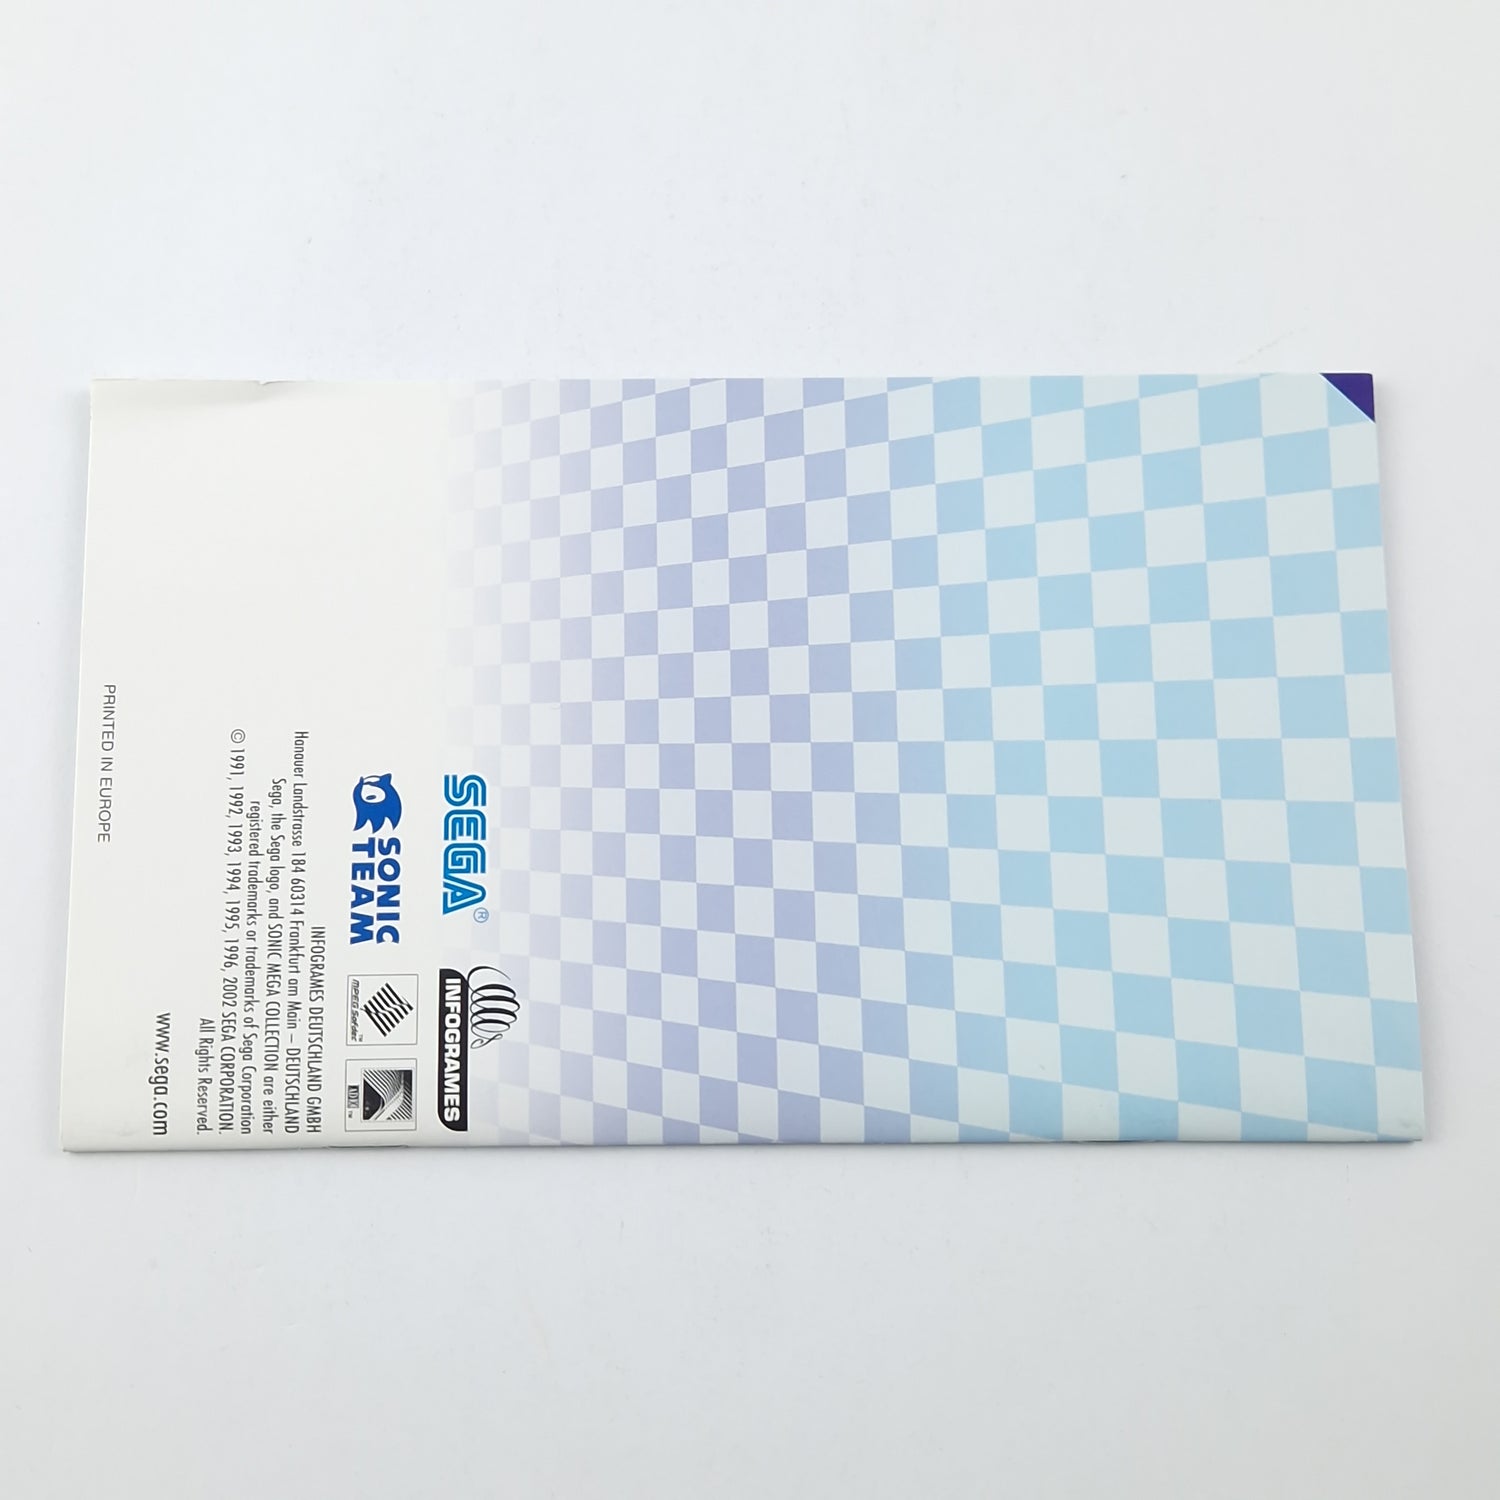 Nintendo Gamecube Spiel : Sonic Mega Collection - CD Anleitung OVP PAL GC